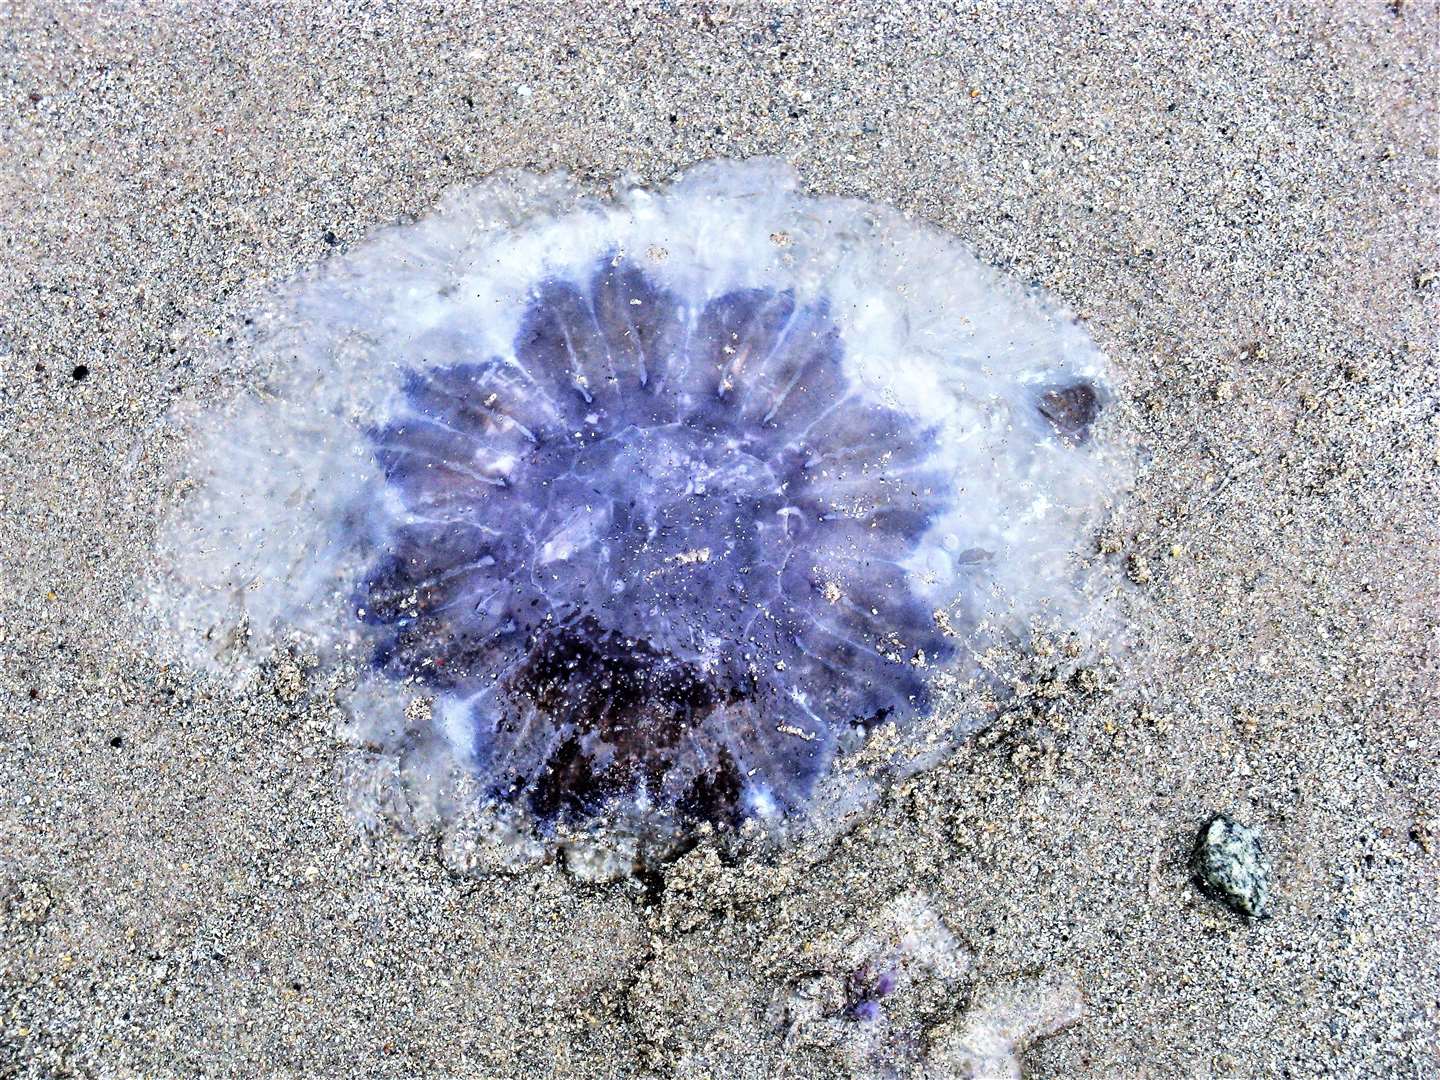 Huge Numbers Of Stinging Jellyfish Hit North Beaches